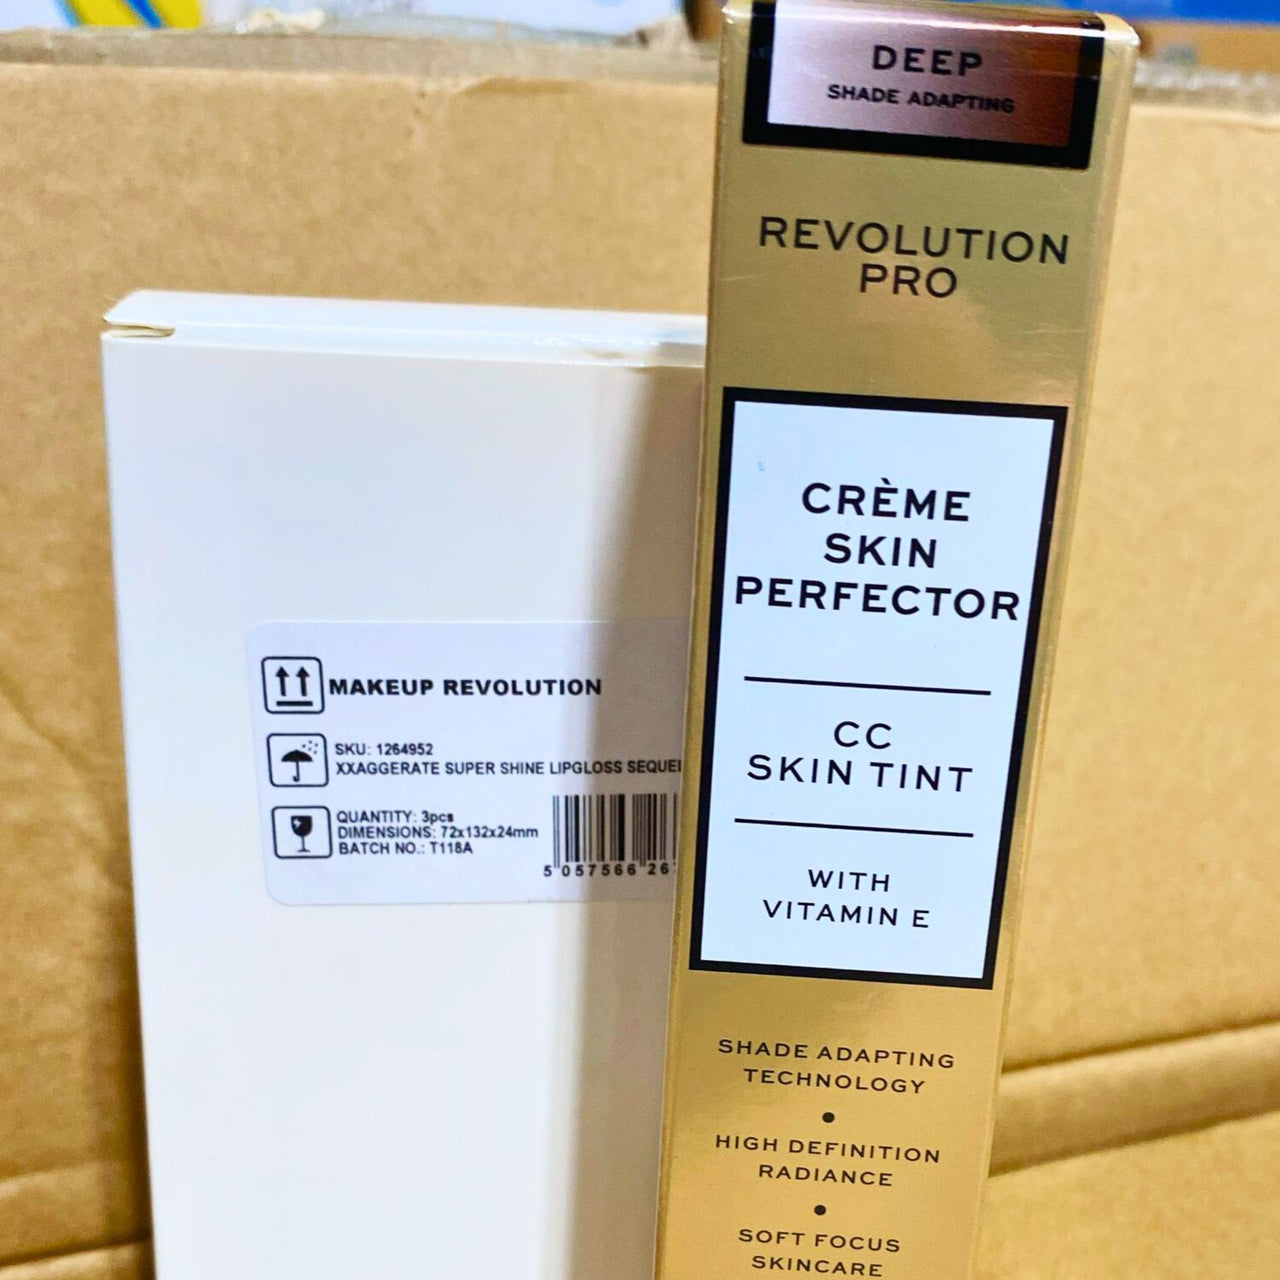 Revolution Pro Creme Skin Perfector CC Skin Tint